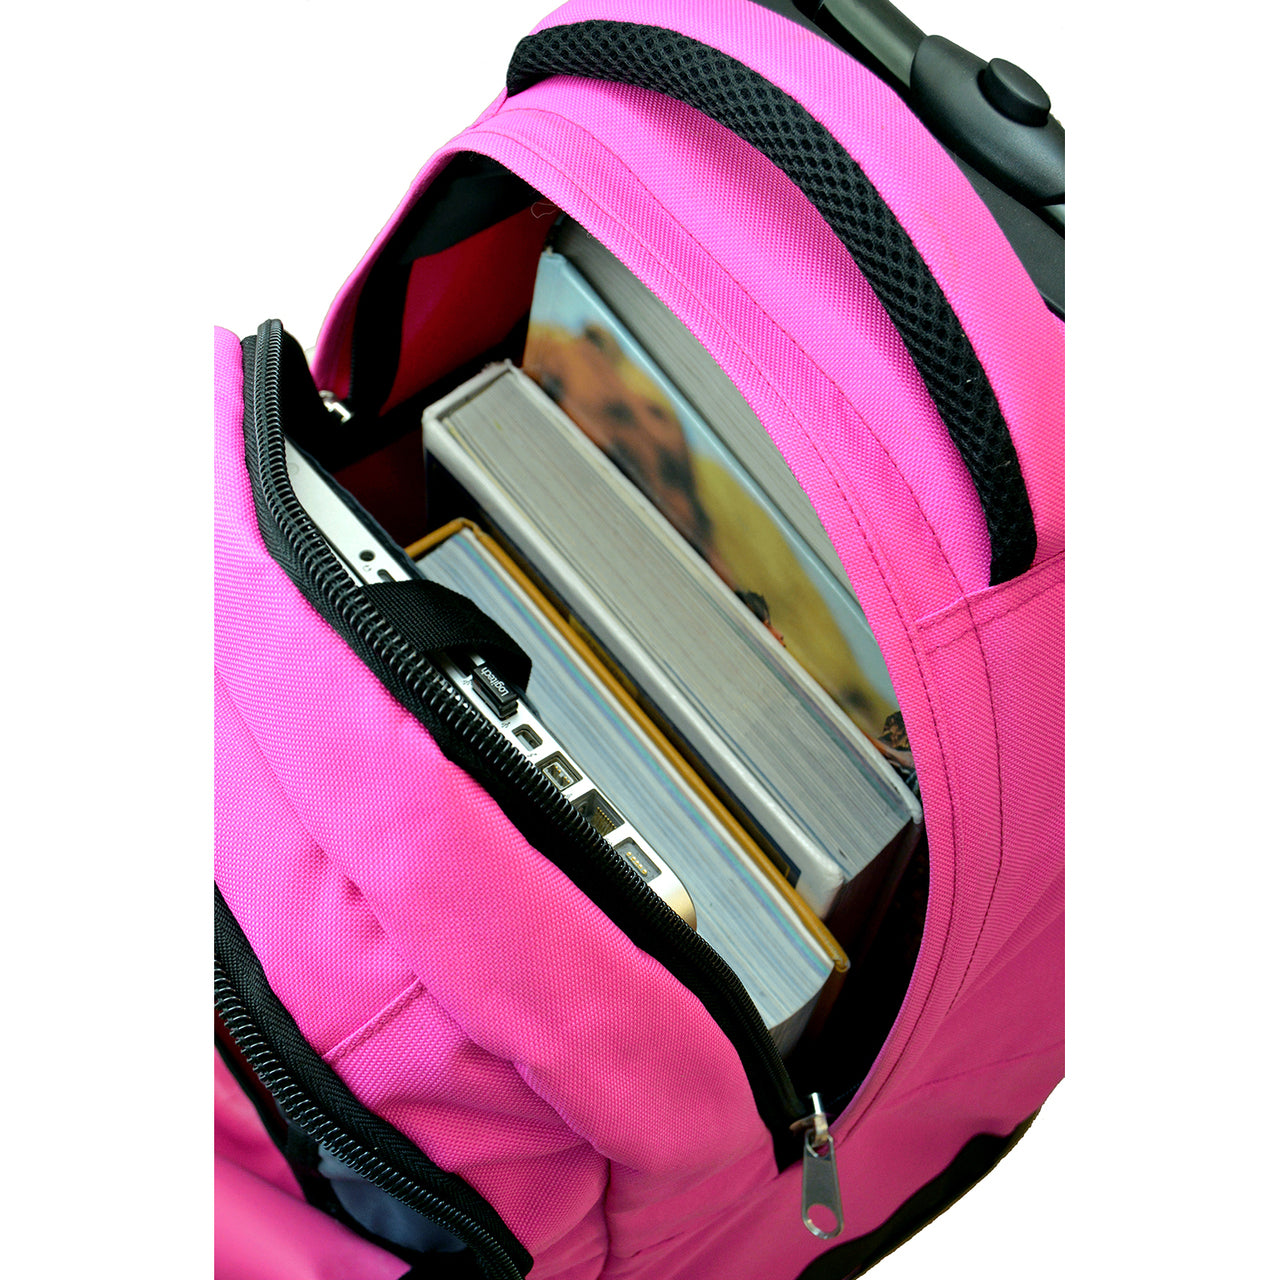 Oklahoma Premium Wheeled Backpack in Pink